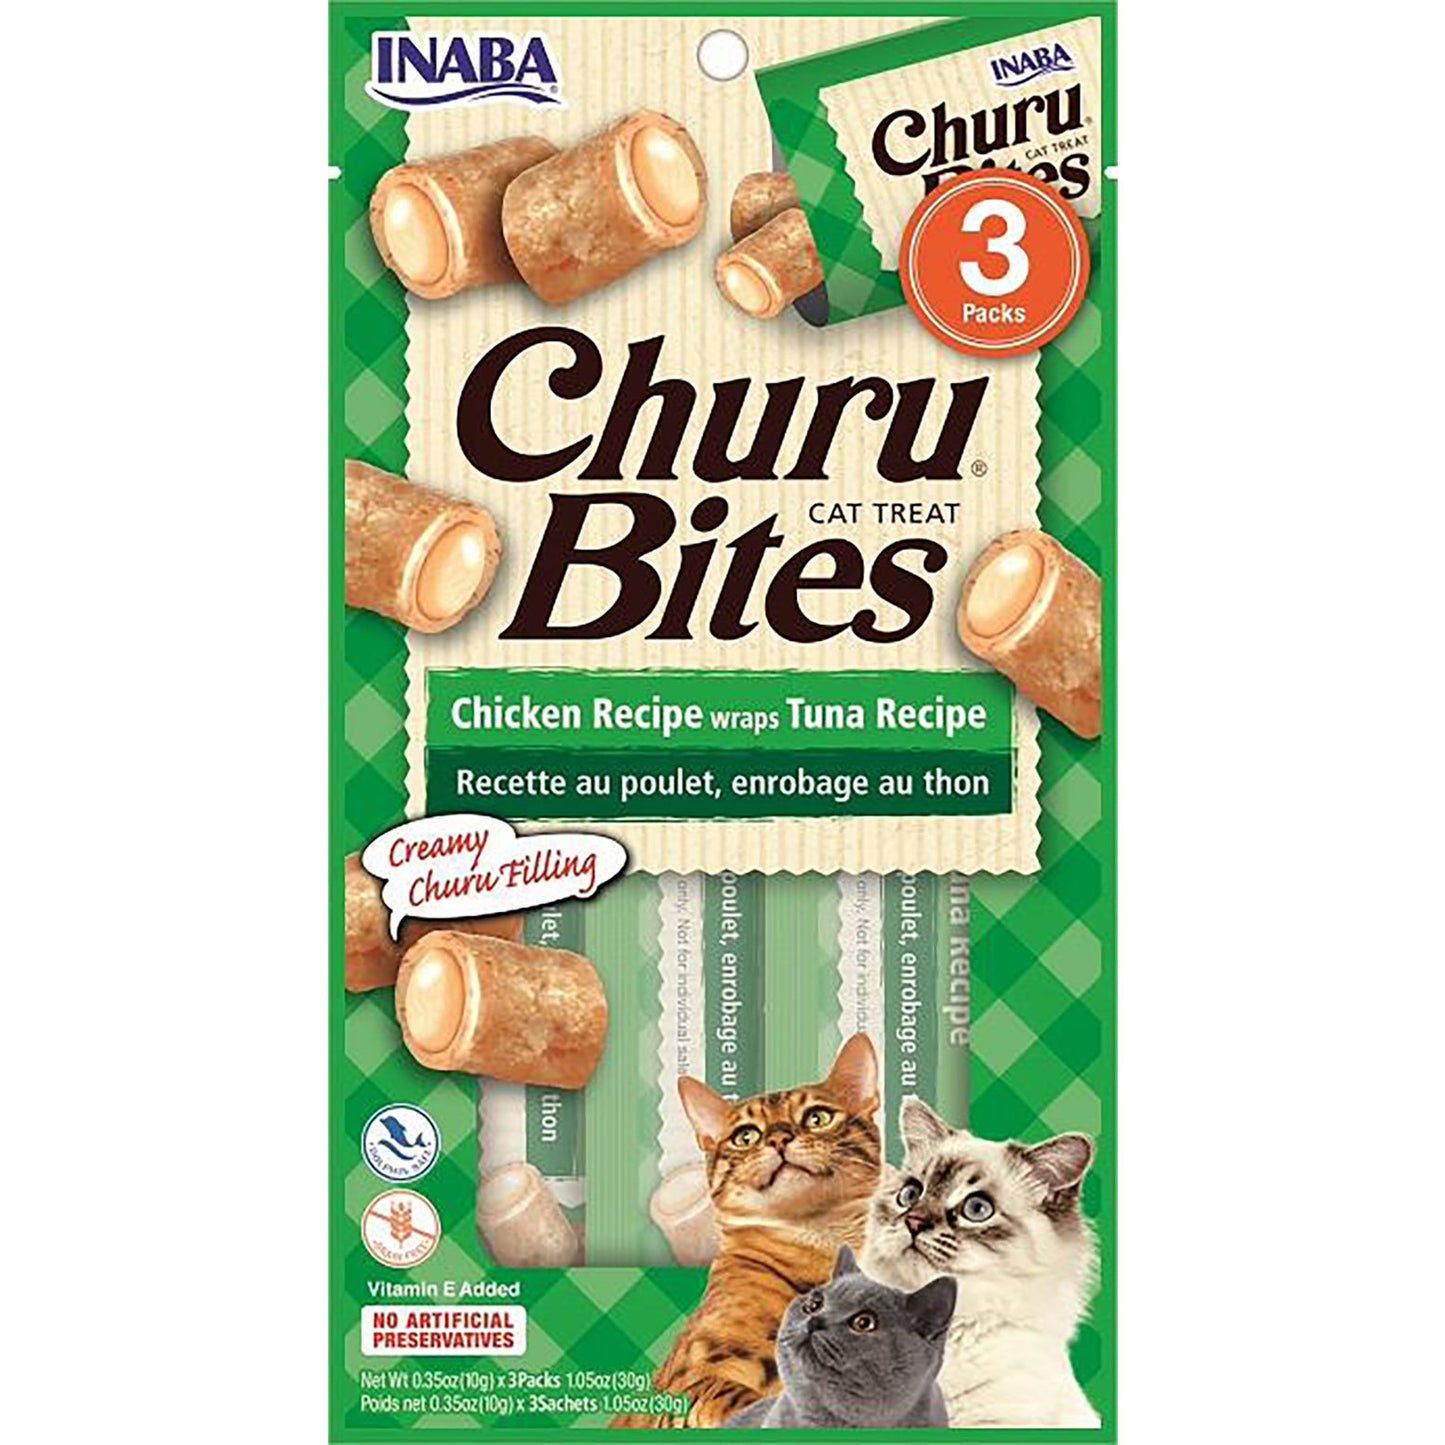 Churu Bites Chicken with Tuna Recipe